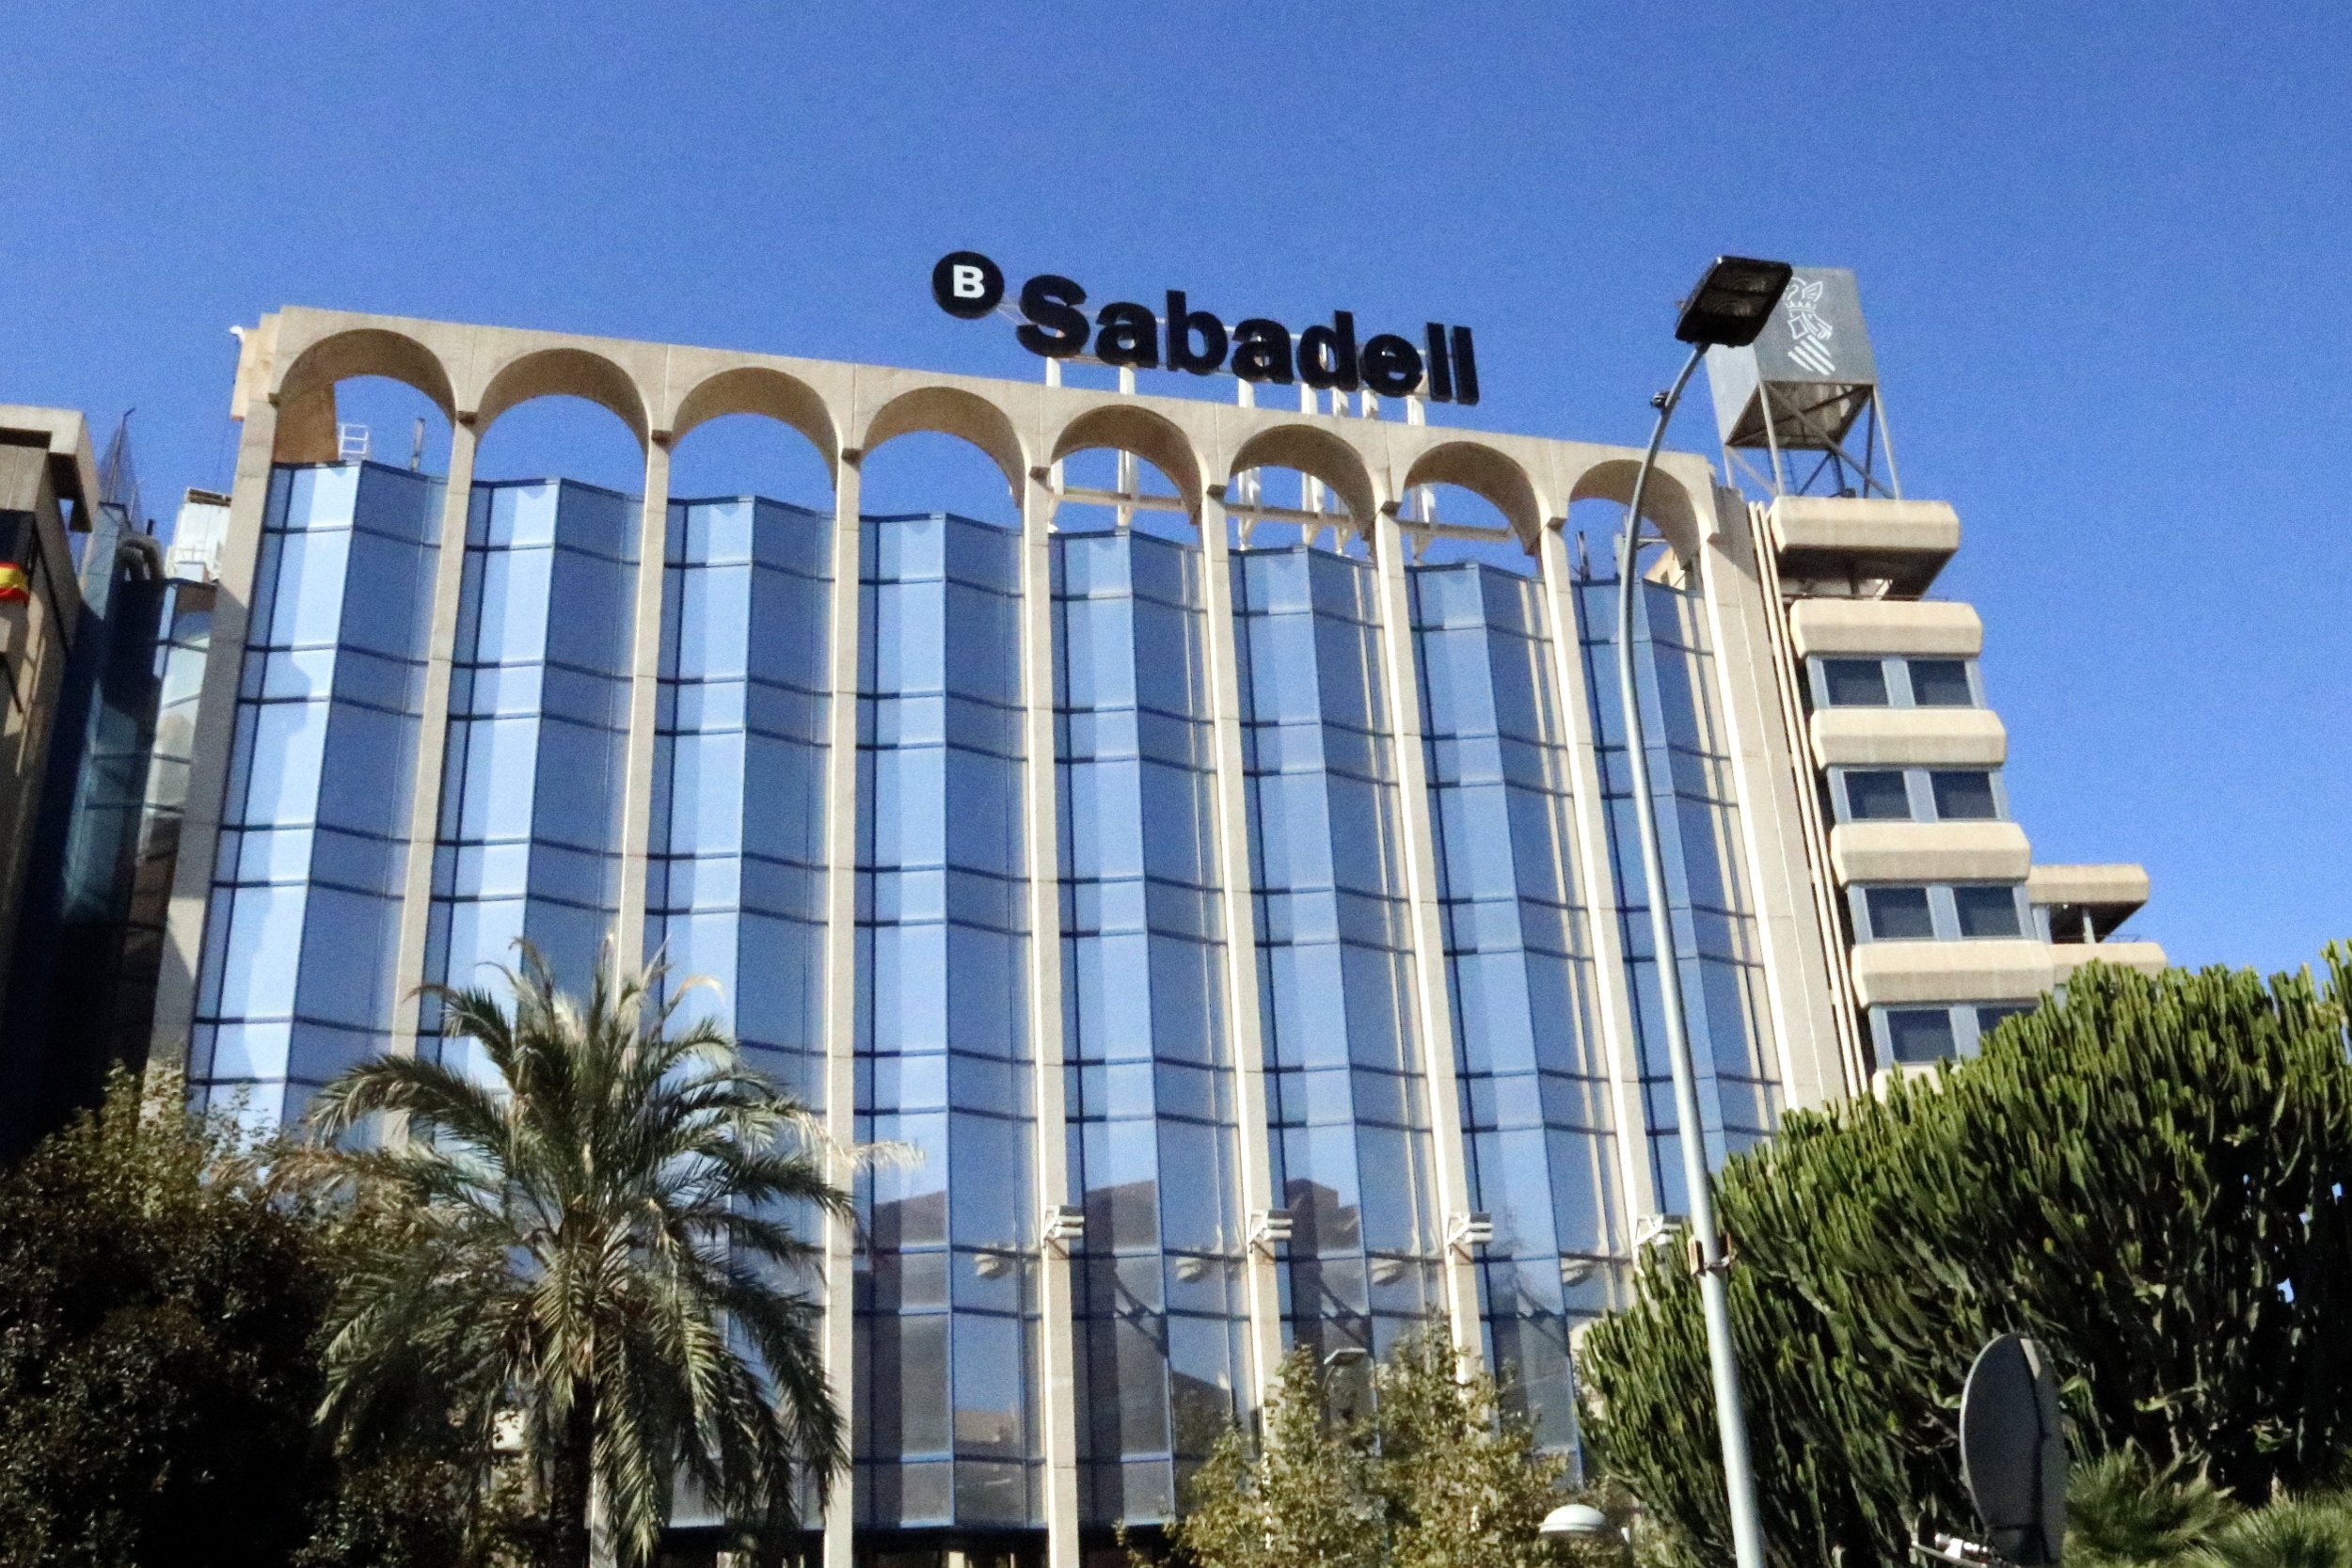 El Sabadell ganó dos millones en el 2020 después de provisionar 2.275 millones